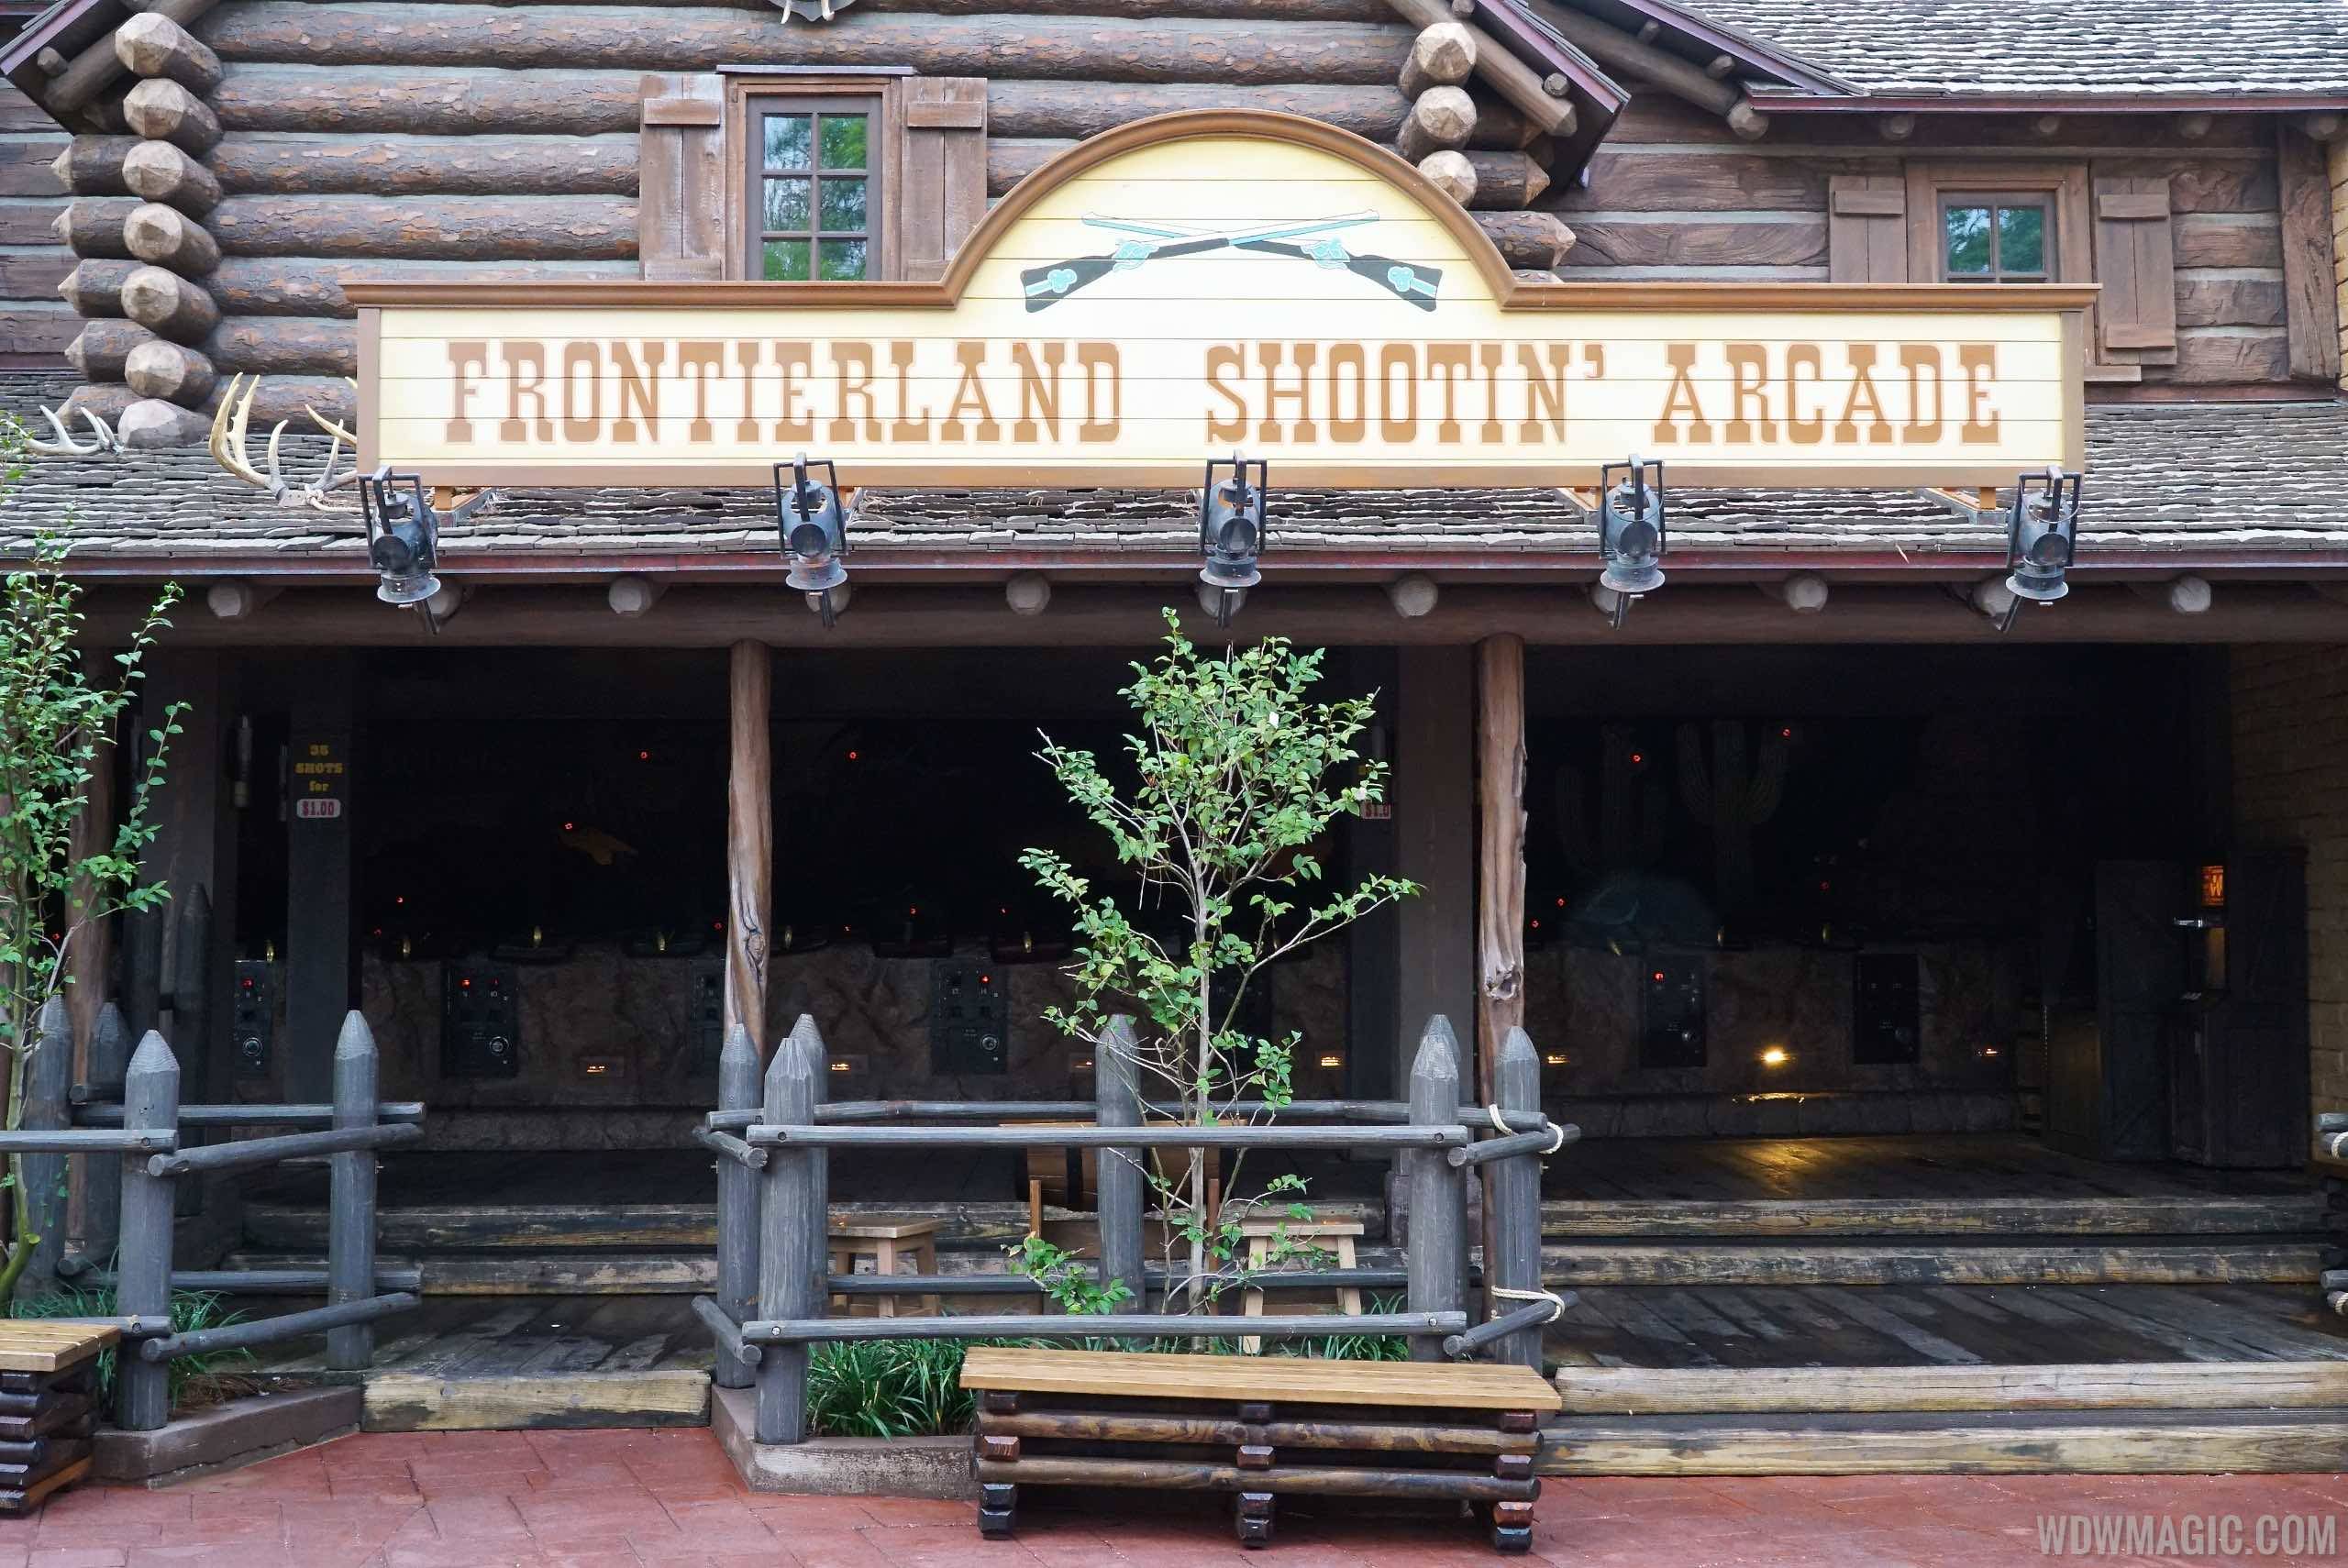 Frontierland Shootin' Arcade signage